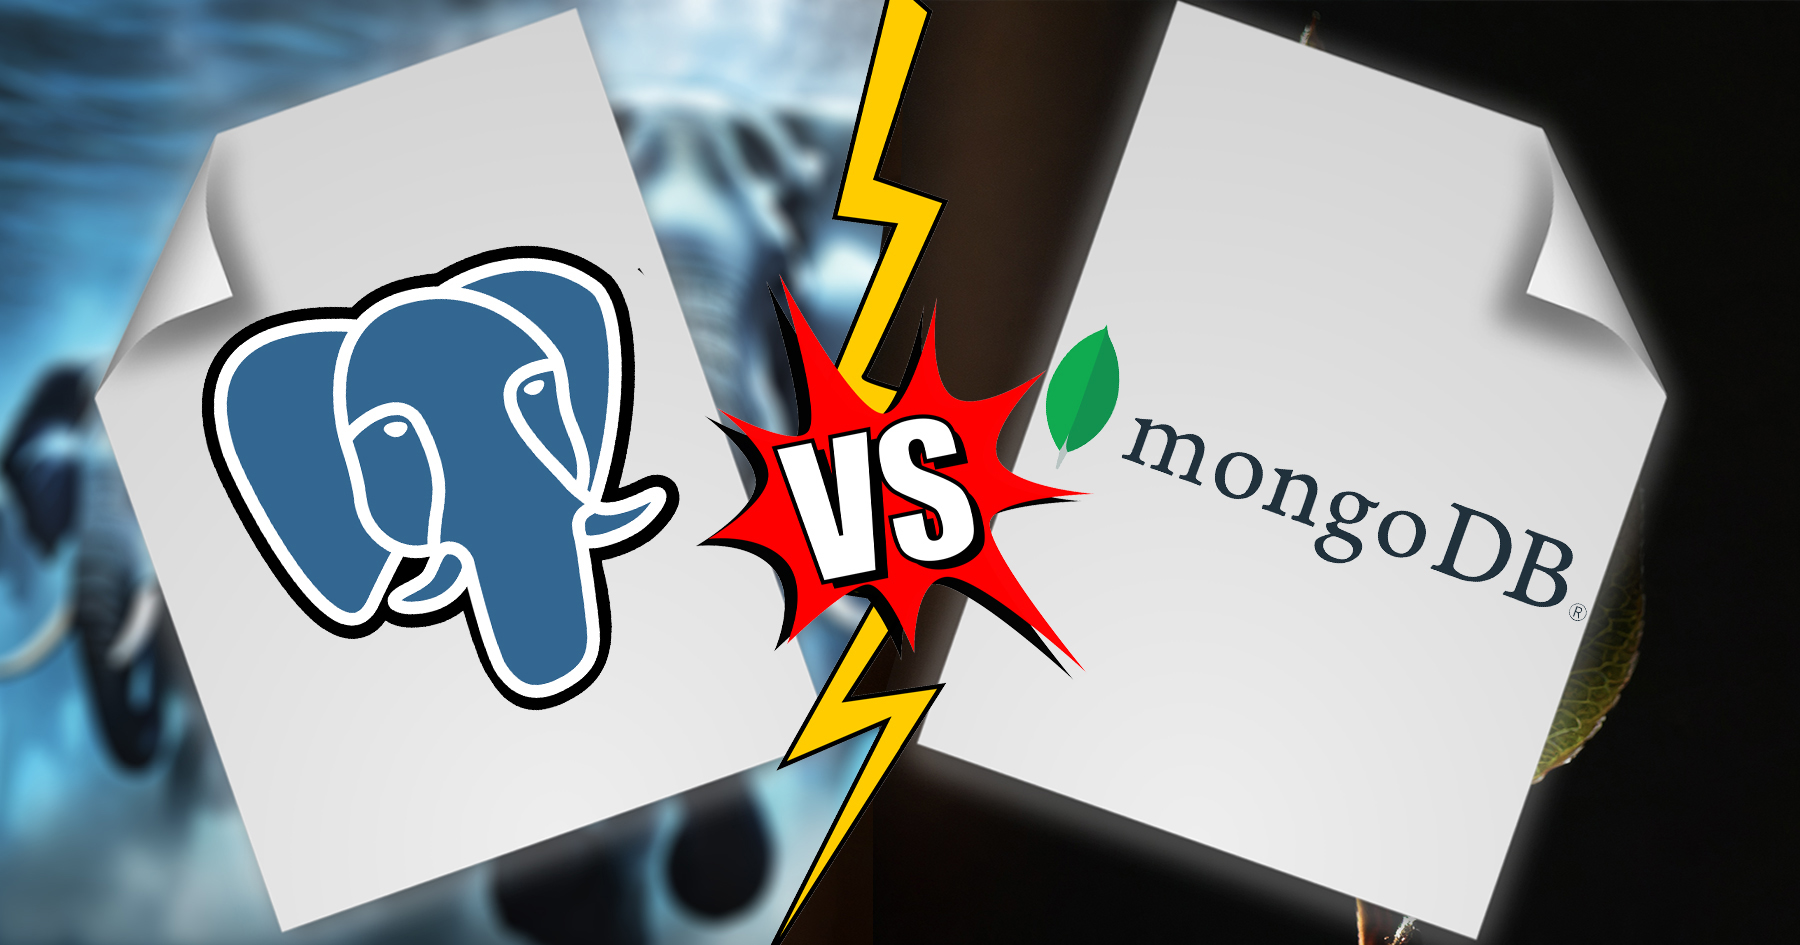 PostgreSQL vs MongoDB